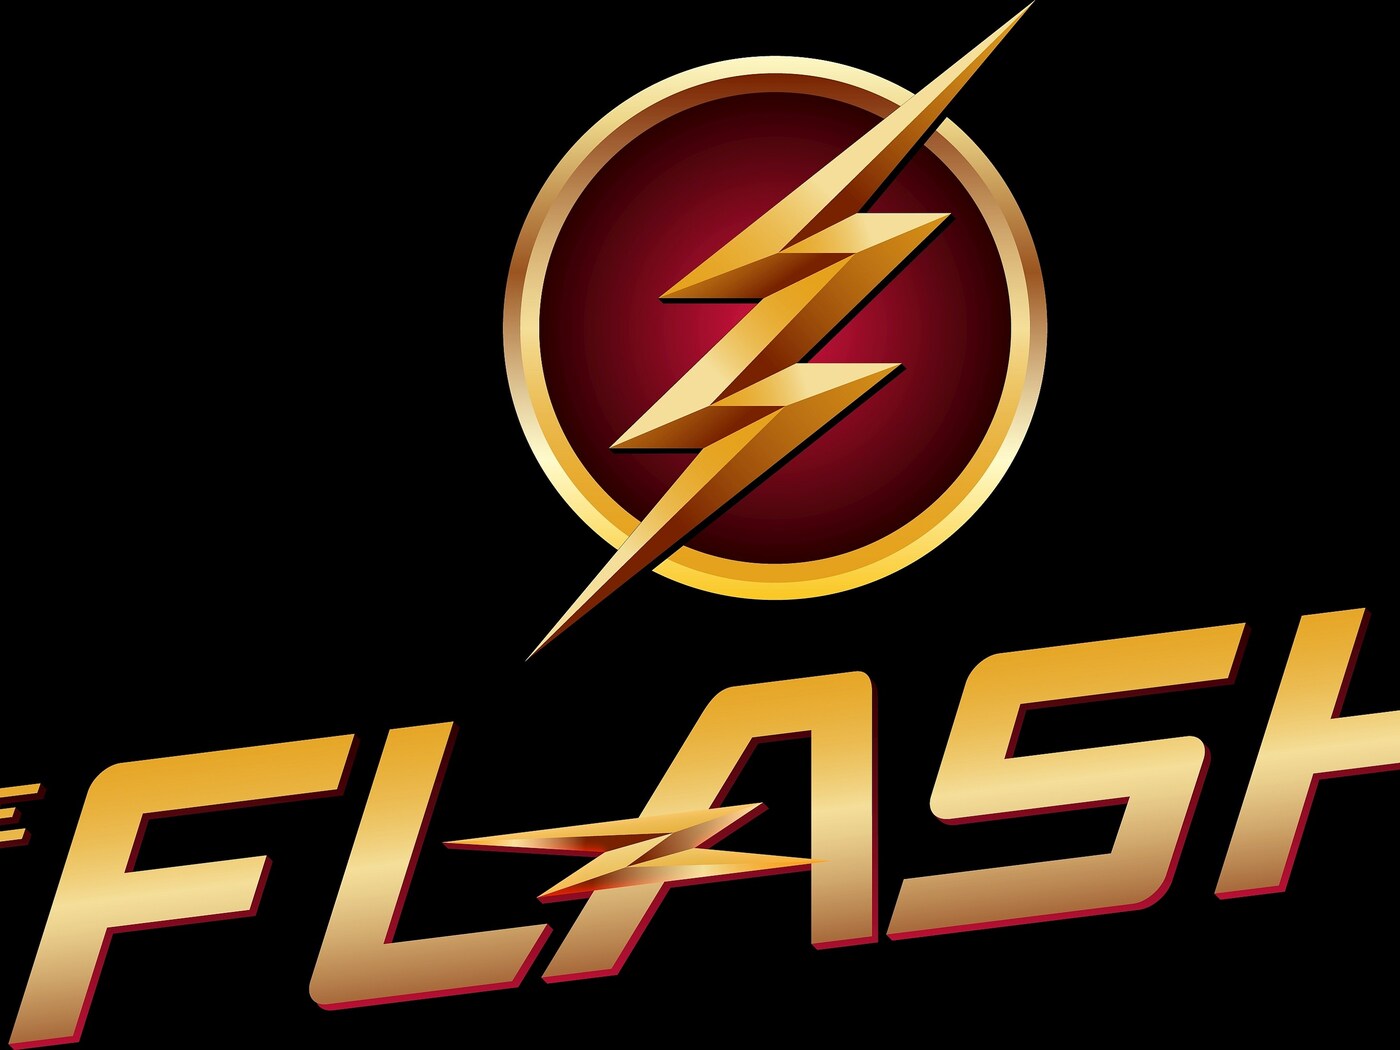 the-flash-logo-4k-js.jpg